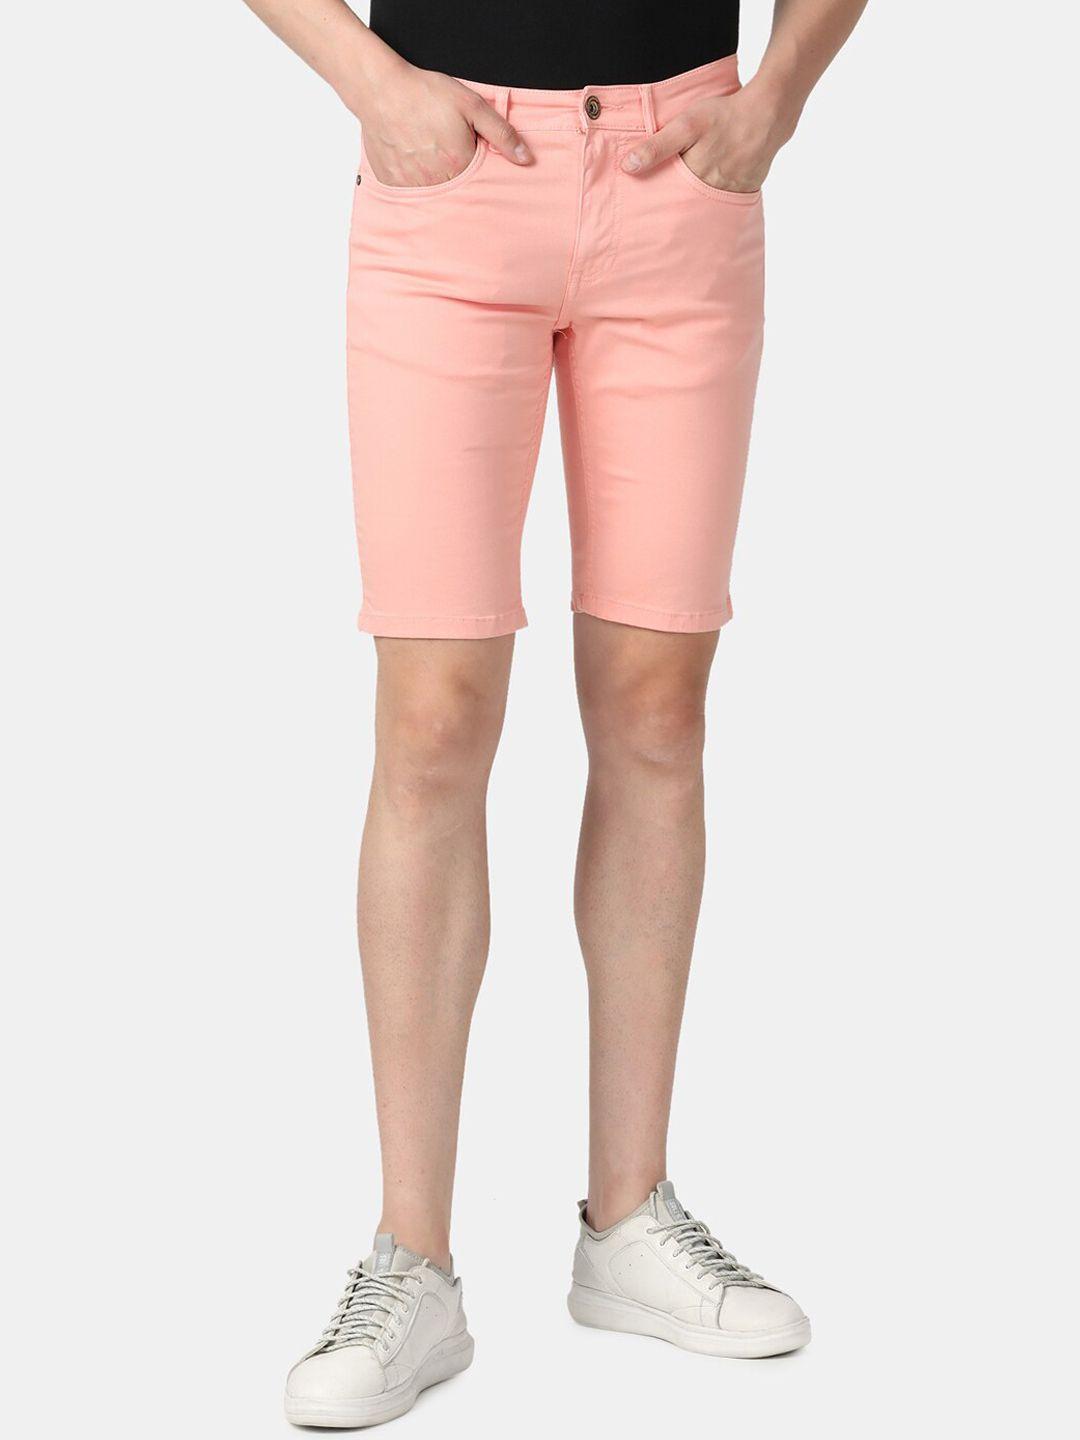 llak-jeans-men-peach-coloured-slim-fit-denim-shorts